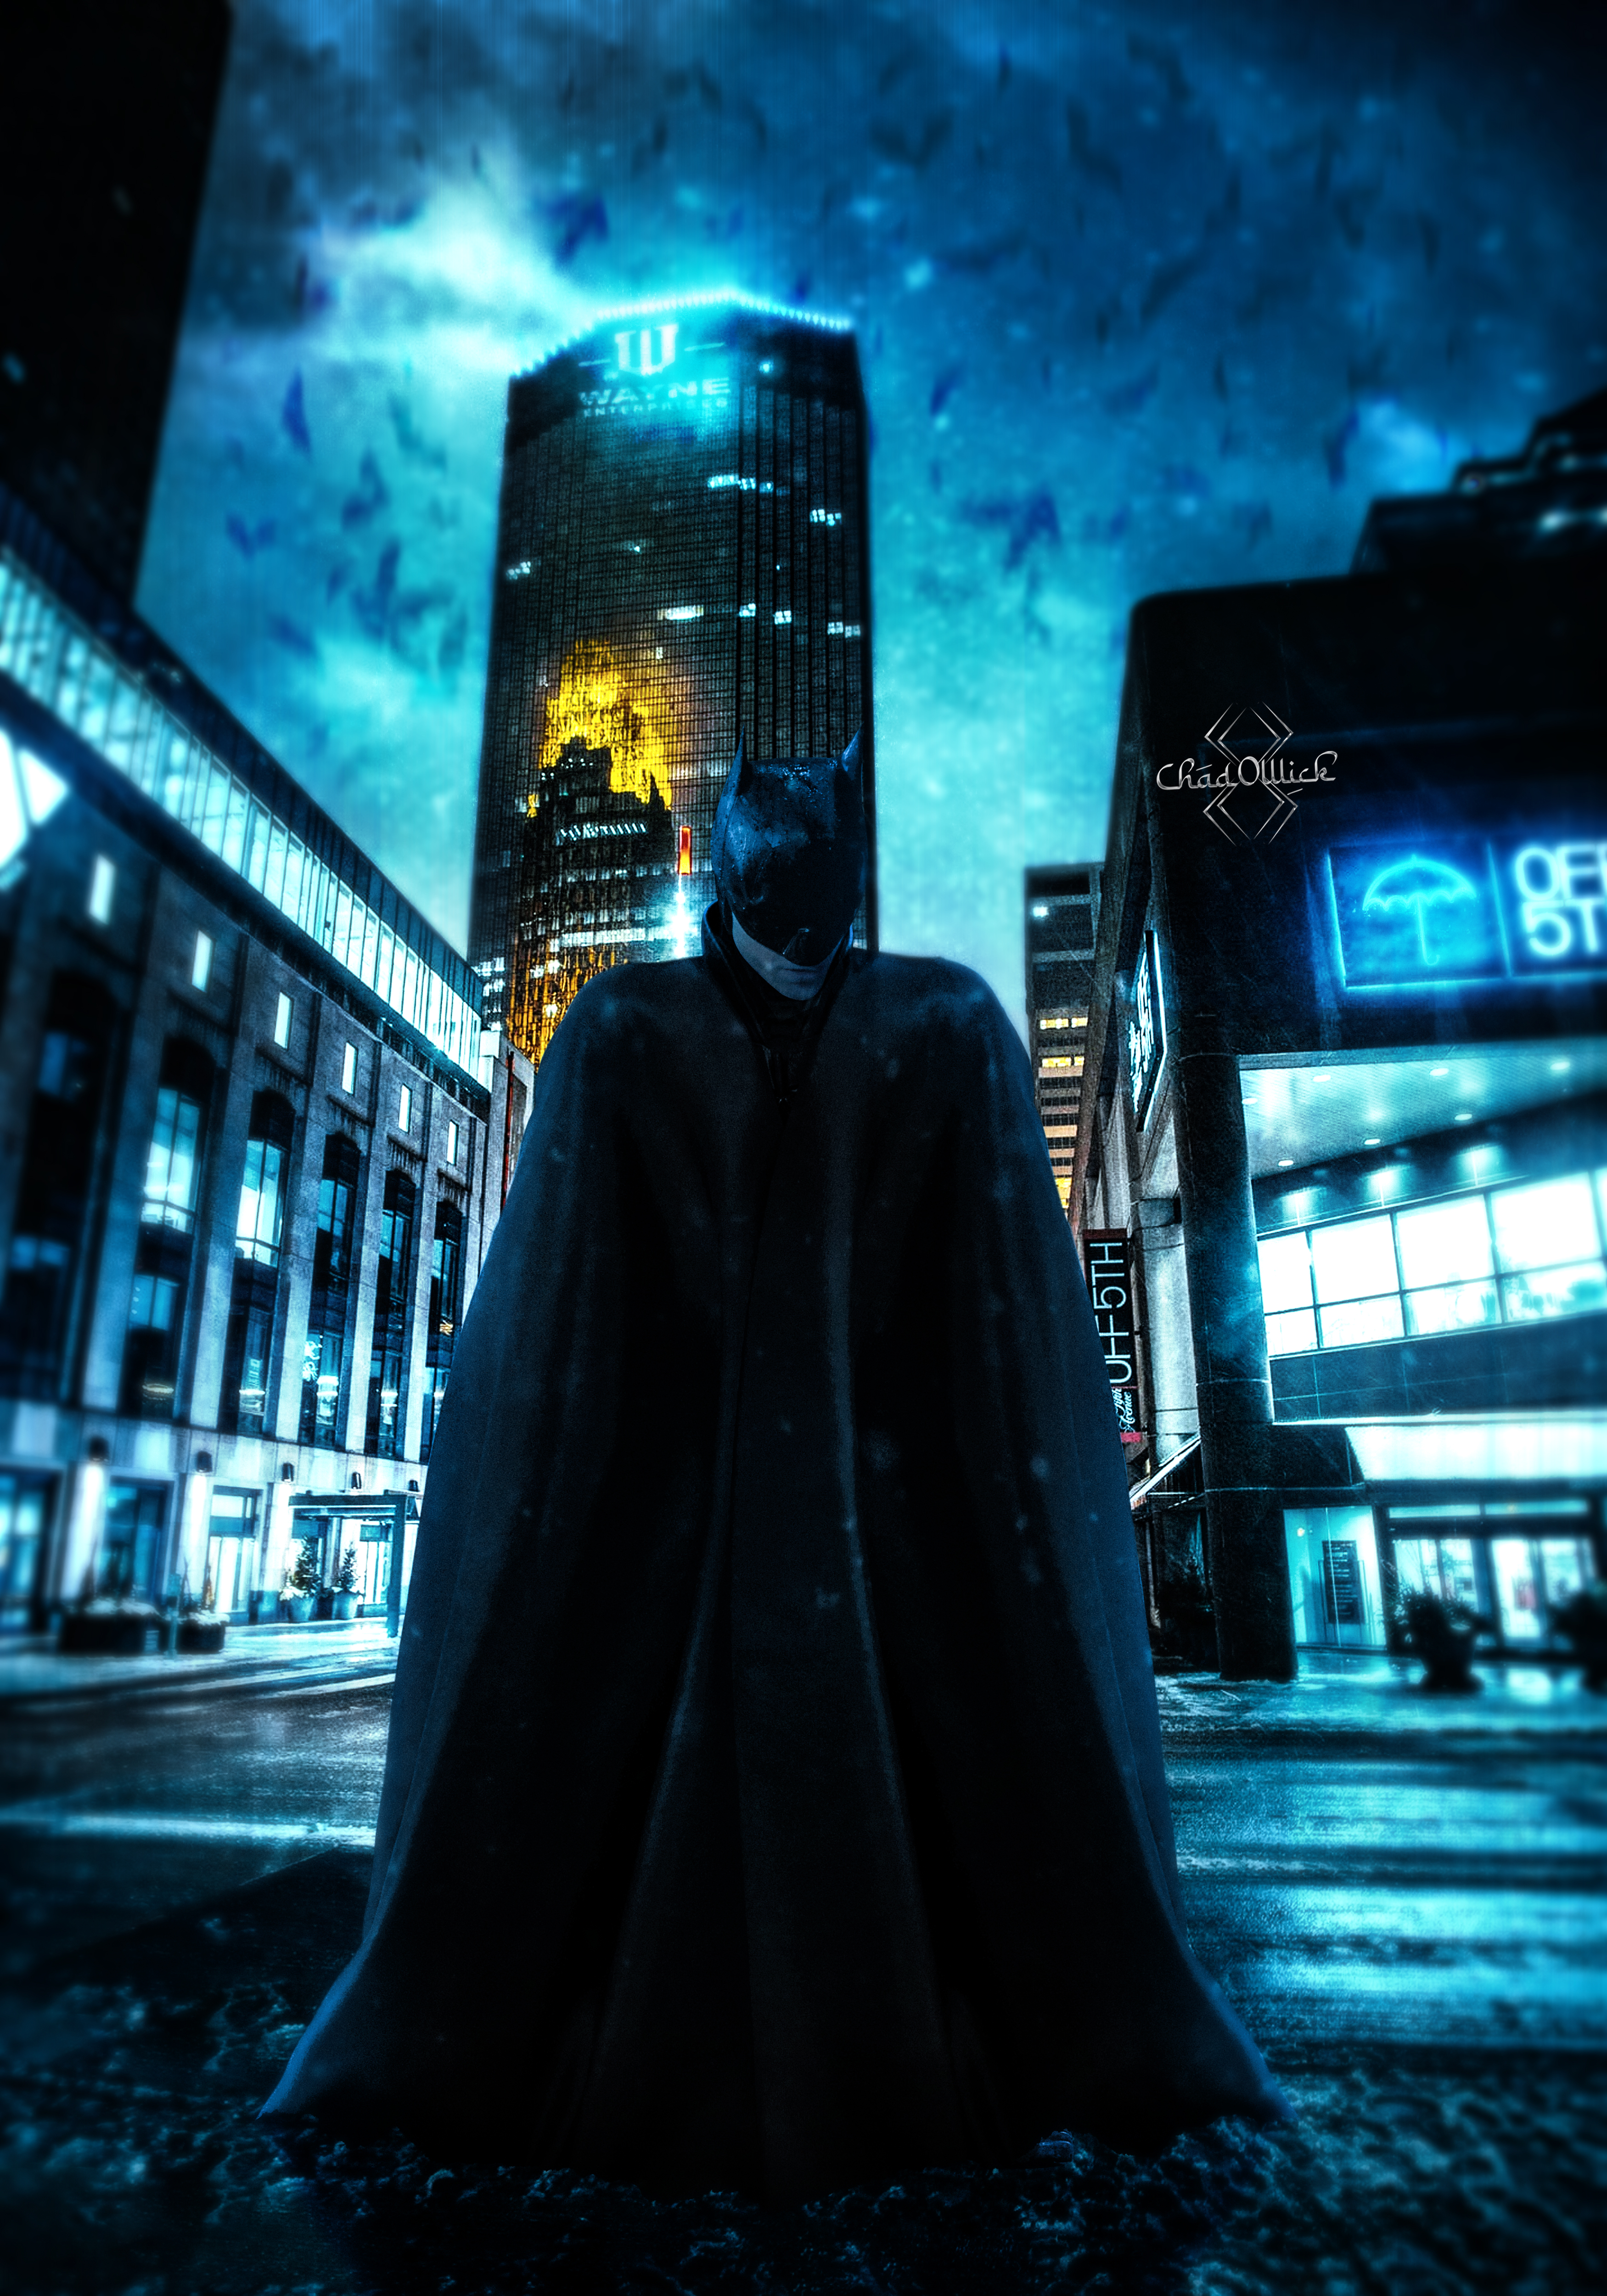 Kevin Conroy as Batman by Daviddv1202 on DeviantArt